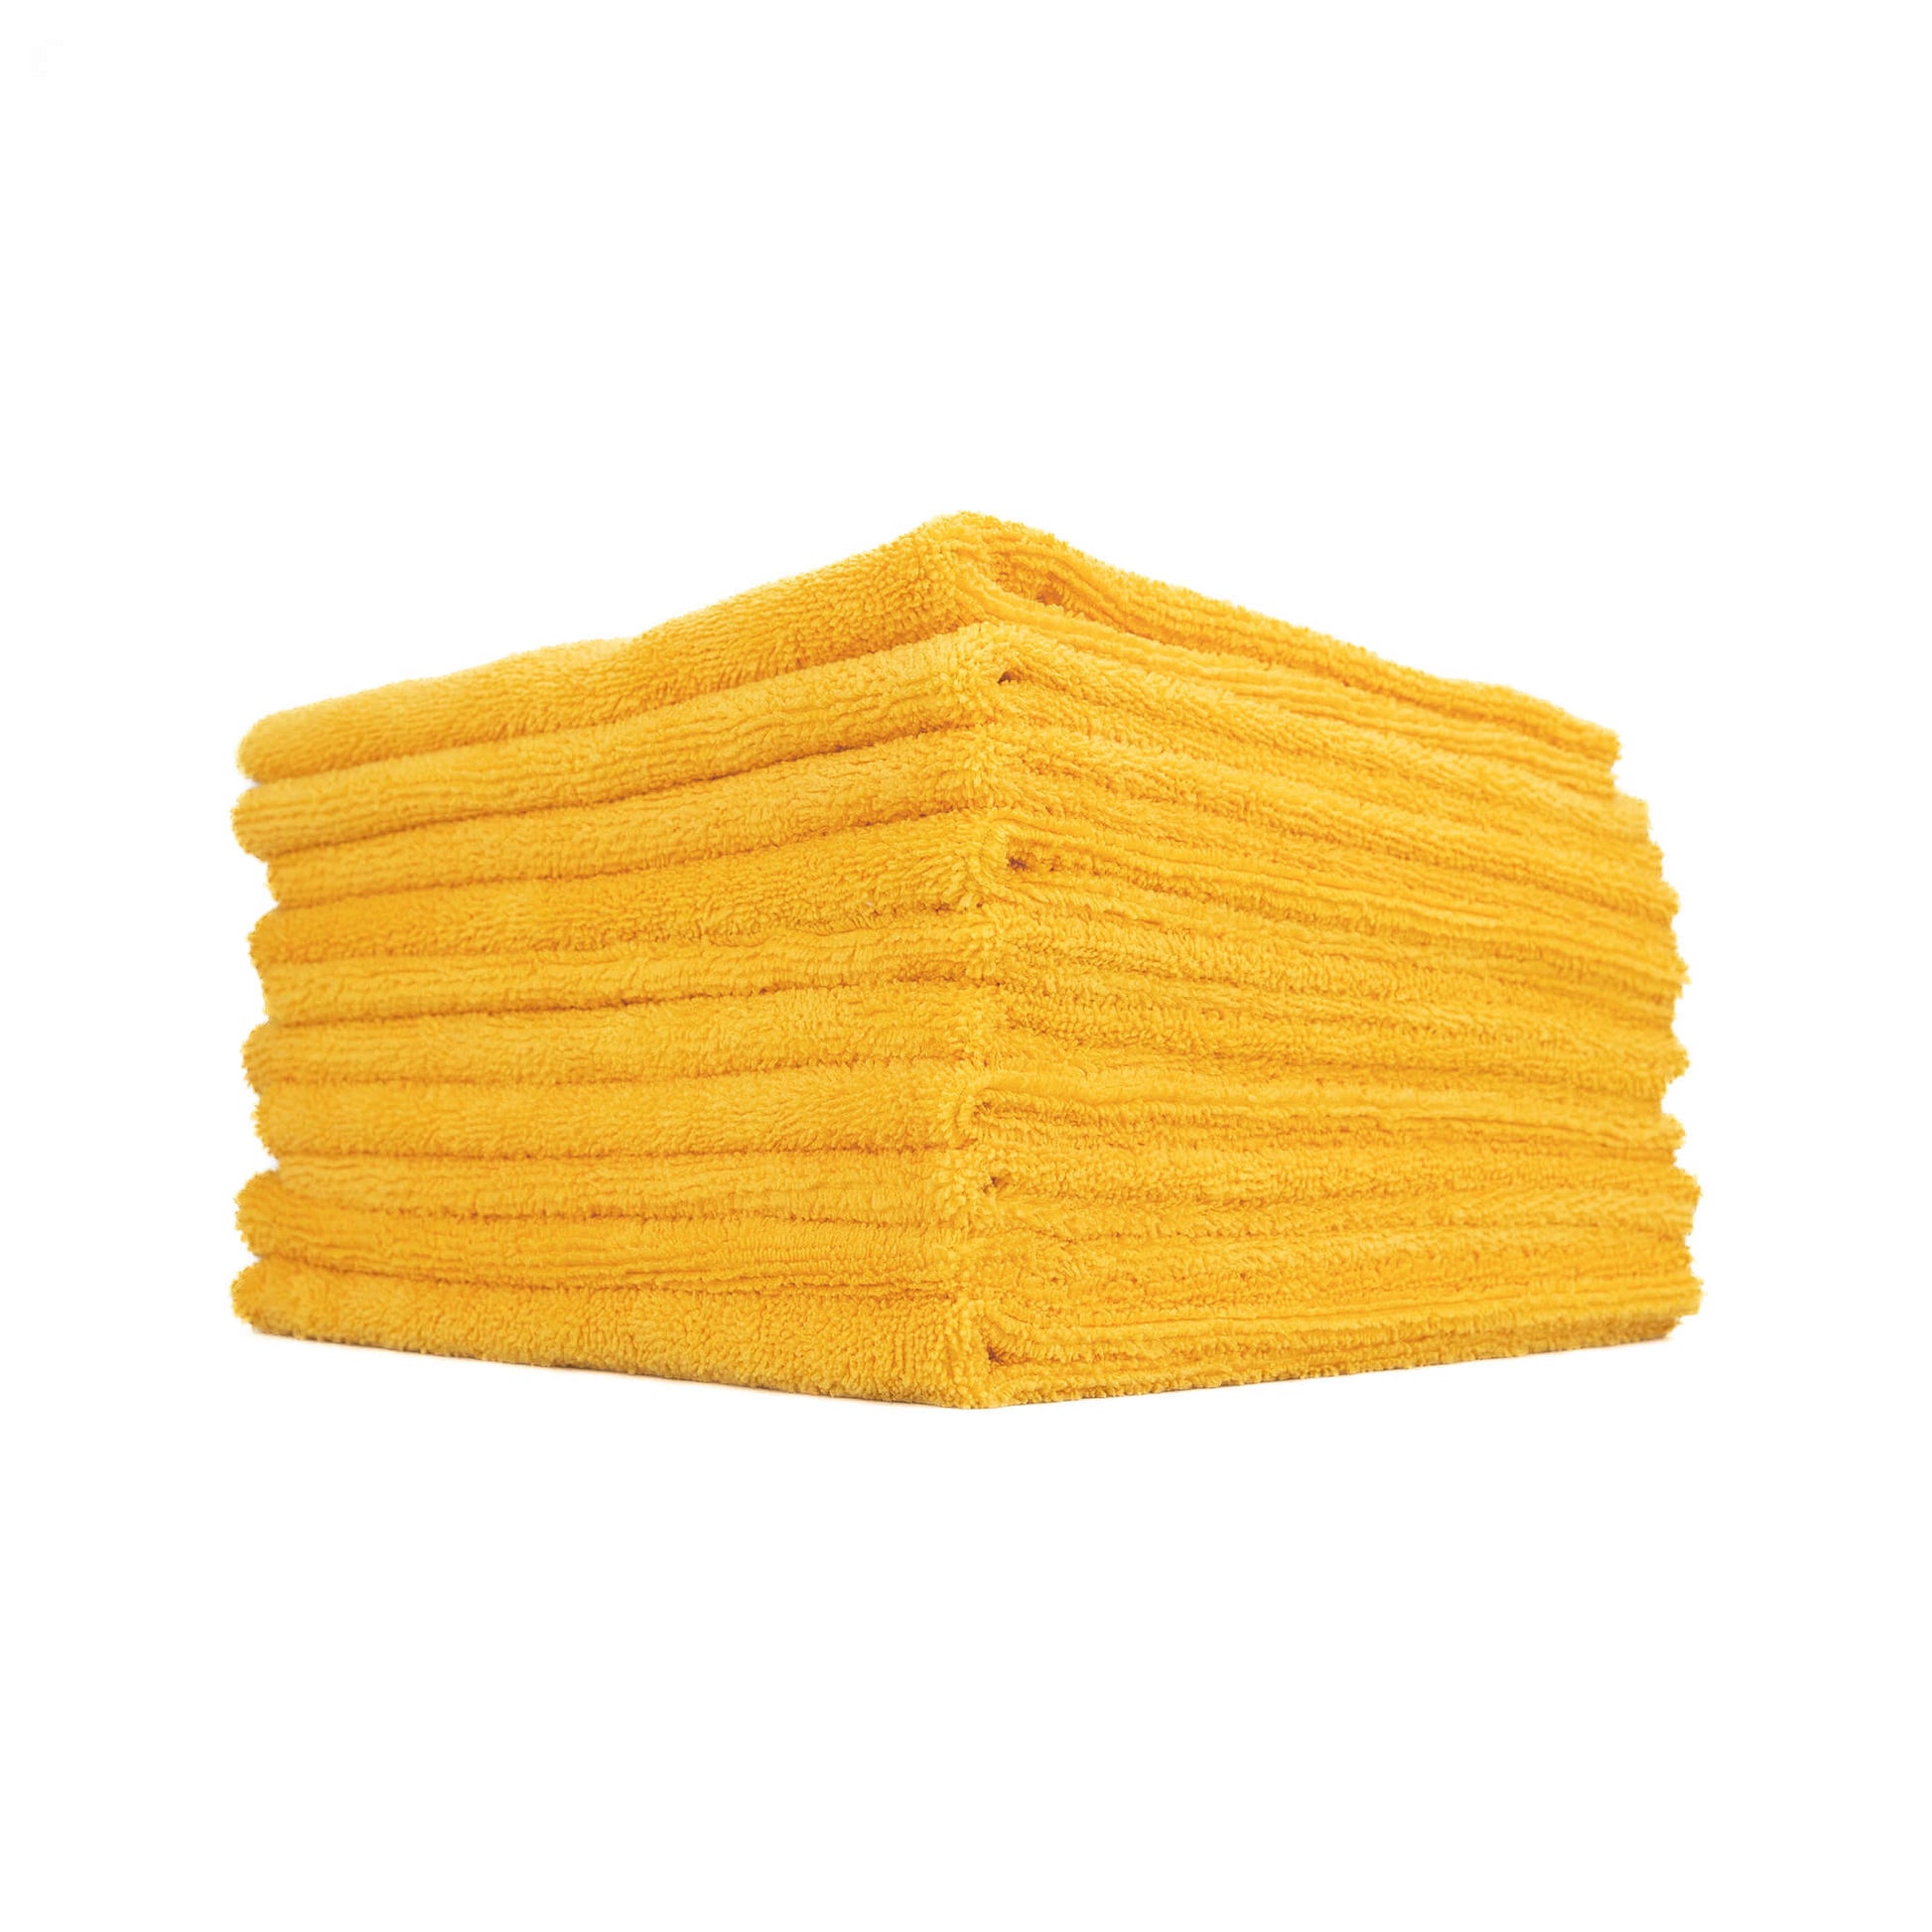 Edgeless 365 Premium Microfiber Terry Detailing Towel - 10 Pack Gold